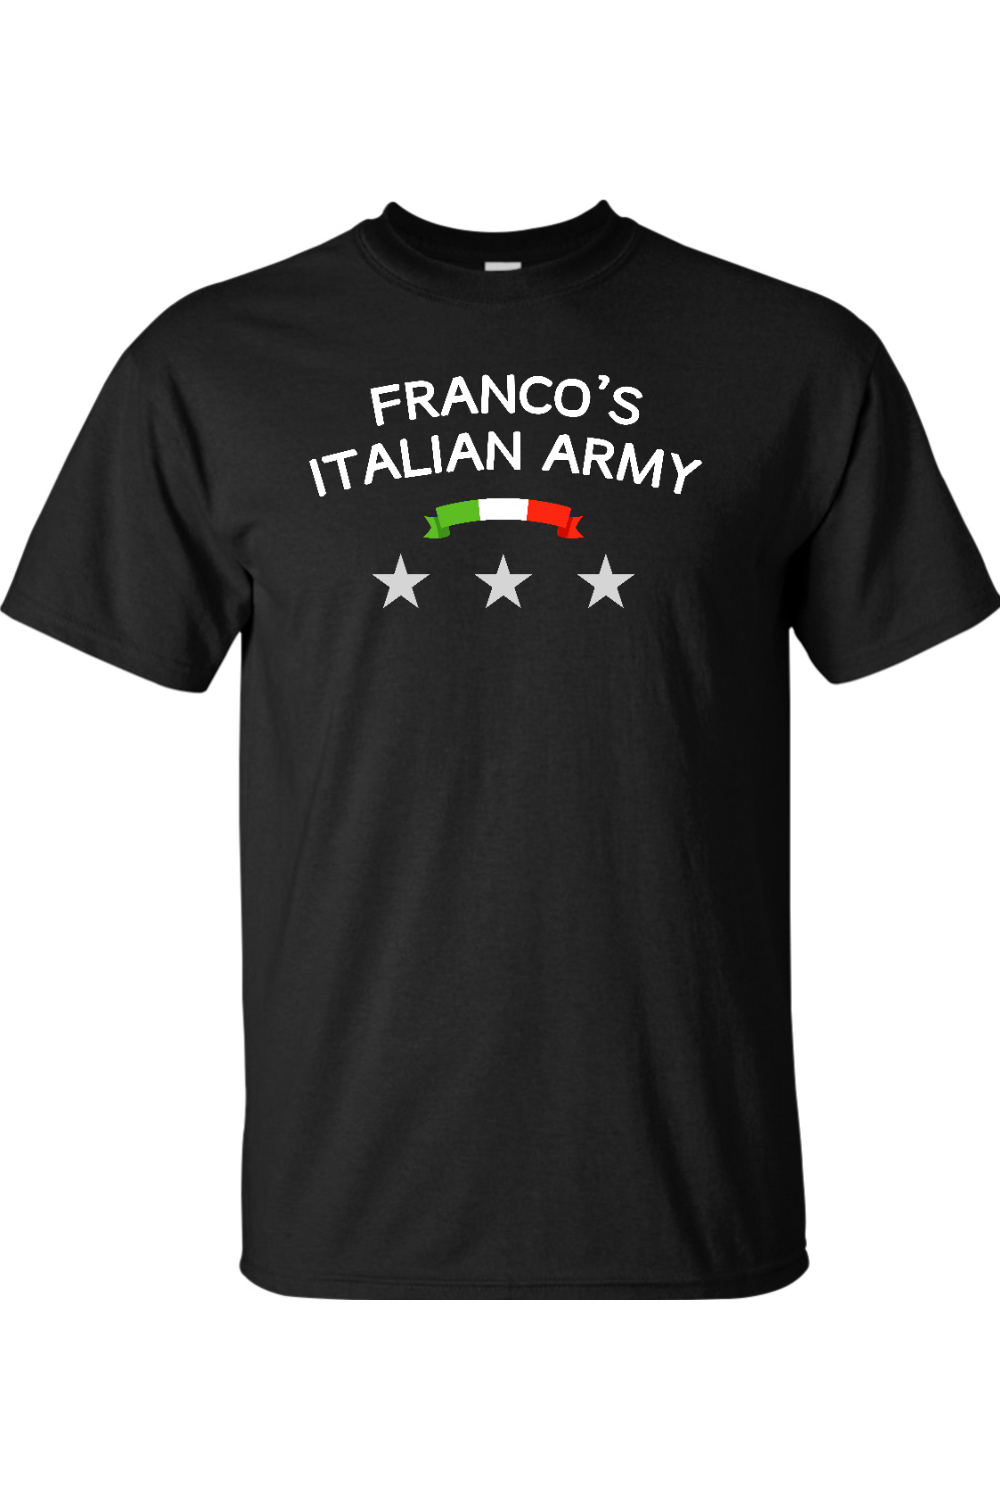 Franco's Italian Army - Big & Tall - Yinzylvania